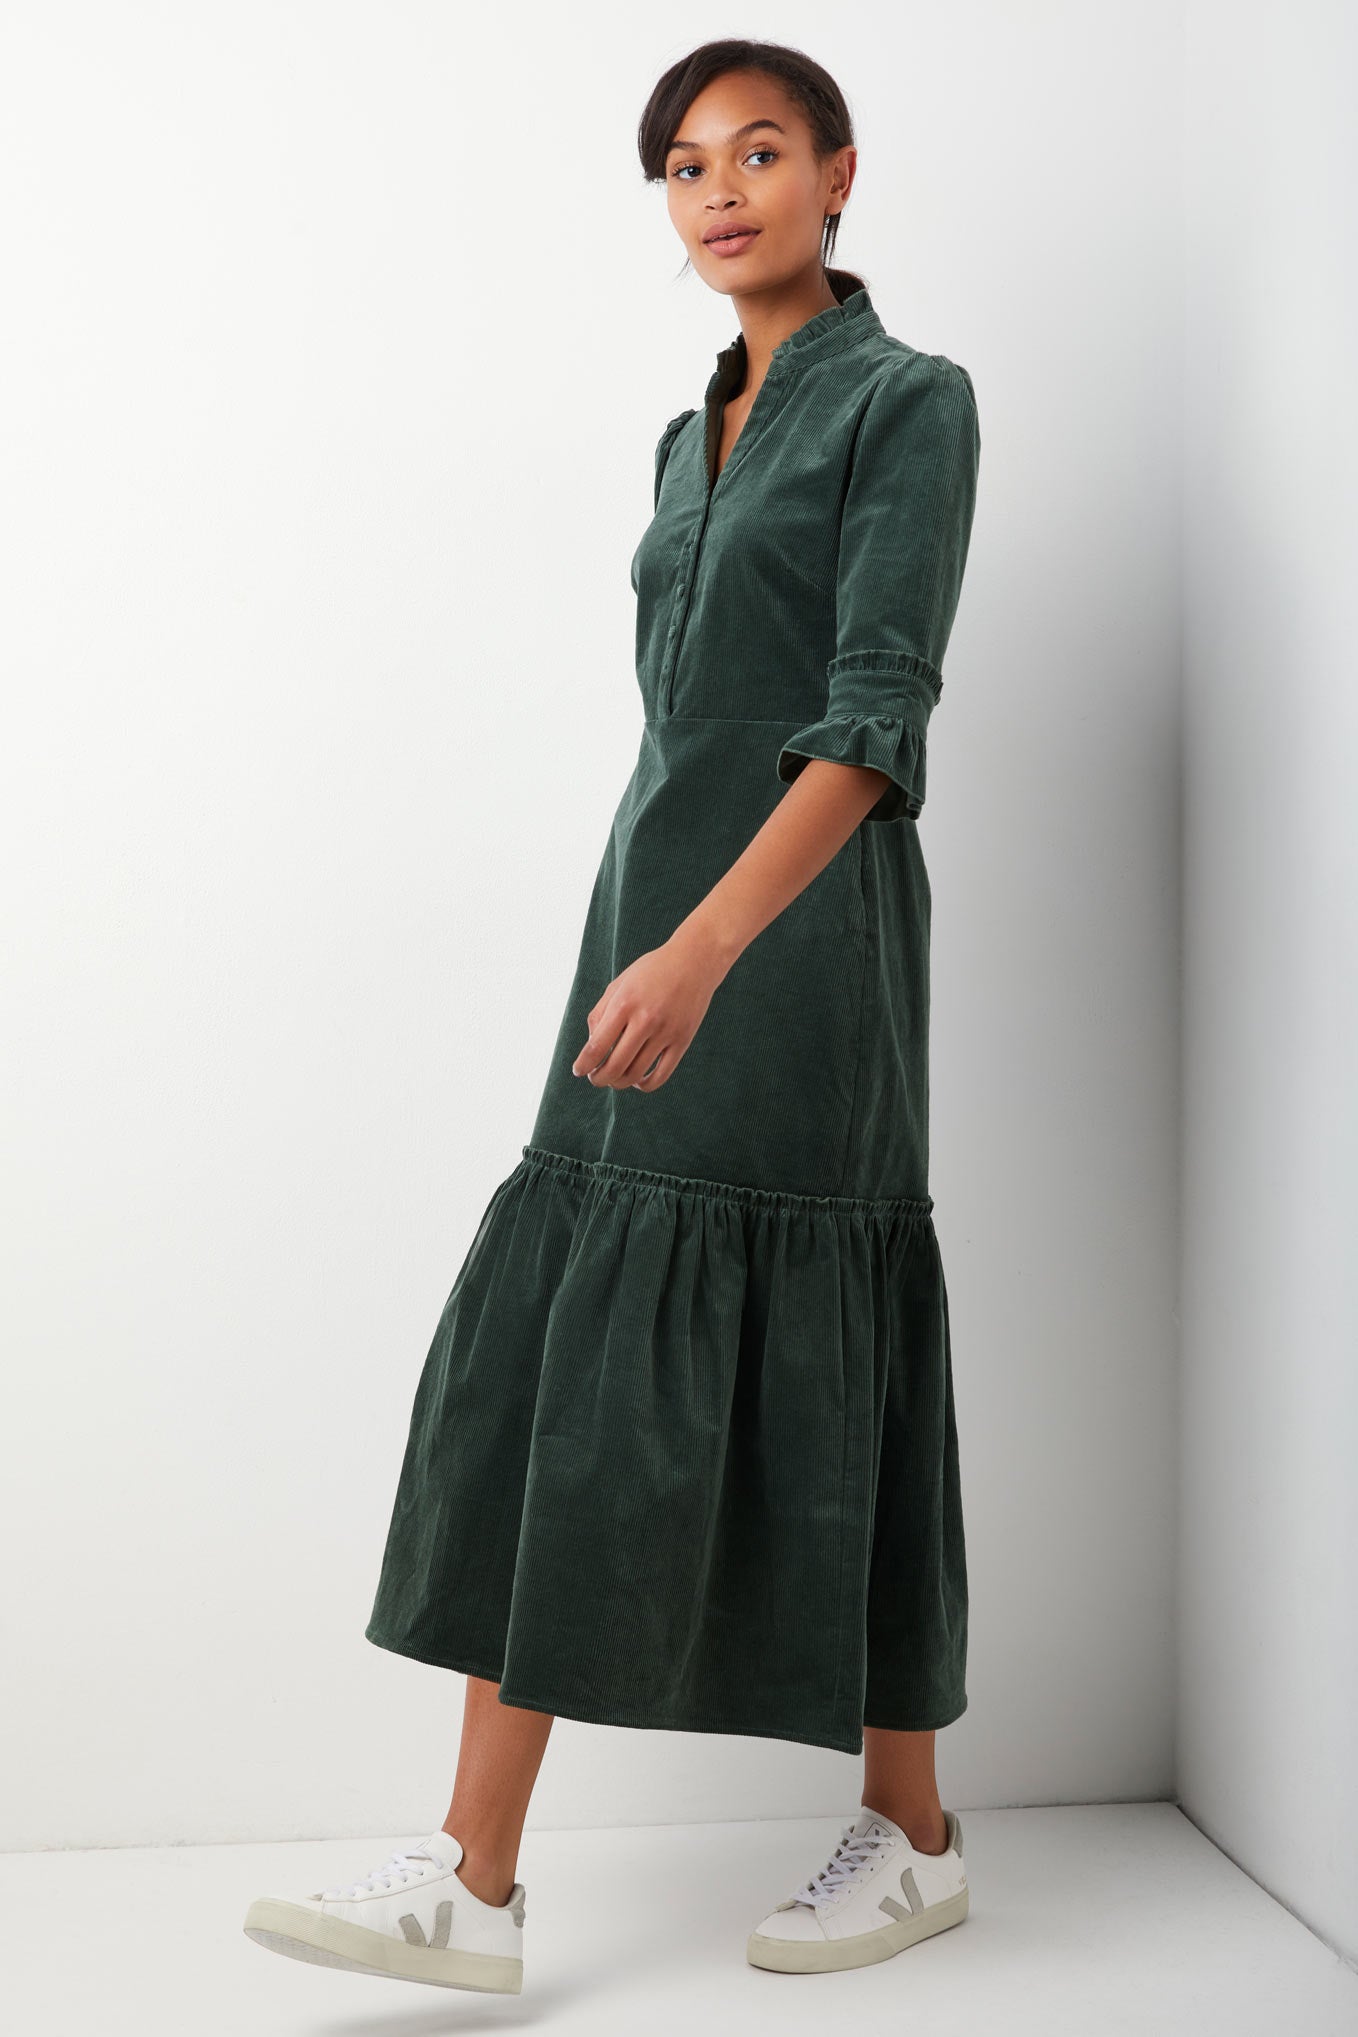 Isobel Corduroy Dress - Sage Green ...